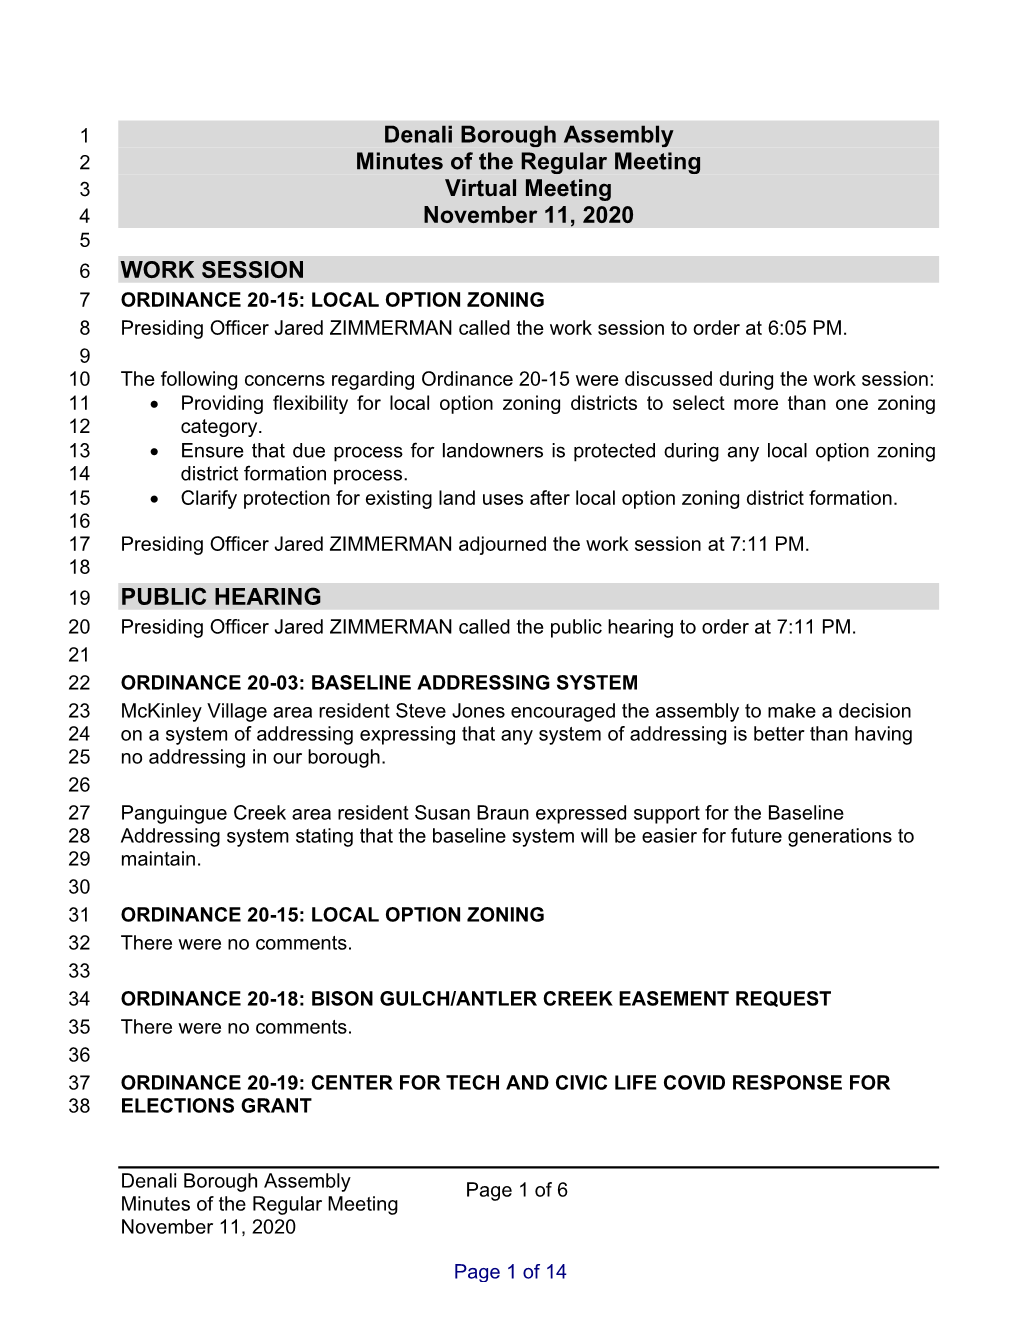 November 11, 2020 Assembly Meeting Minutes